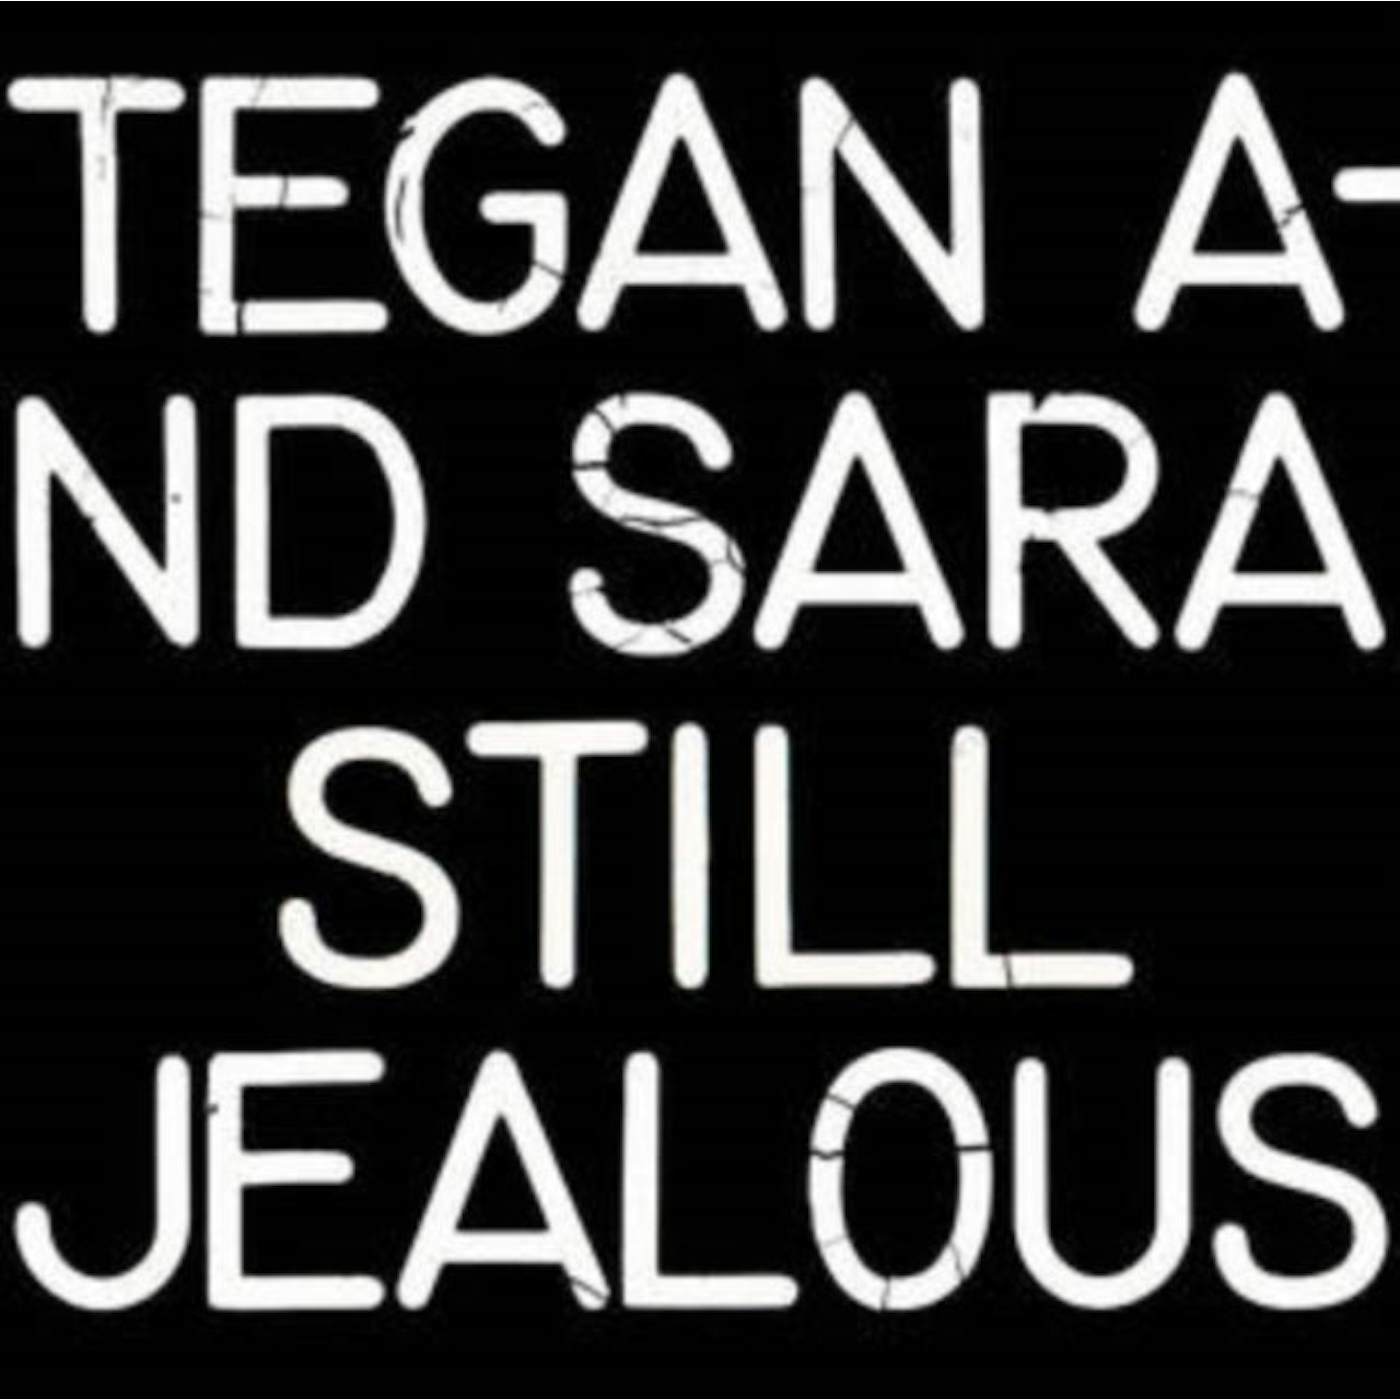 Tegan and Sara LP - Rsd 2022 - So Jealous (Translu (Vinyl)